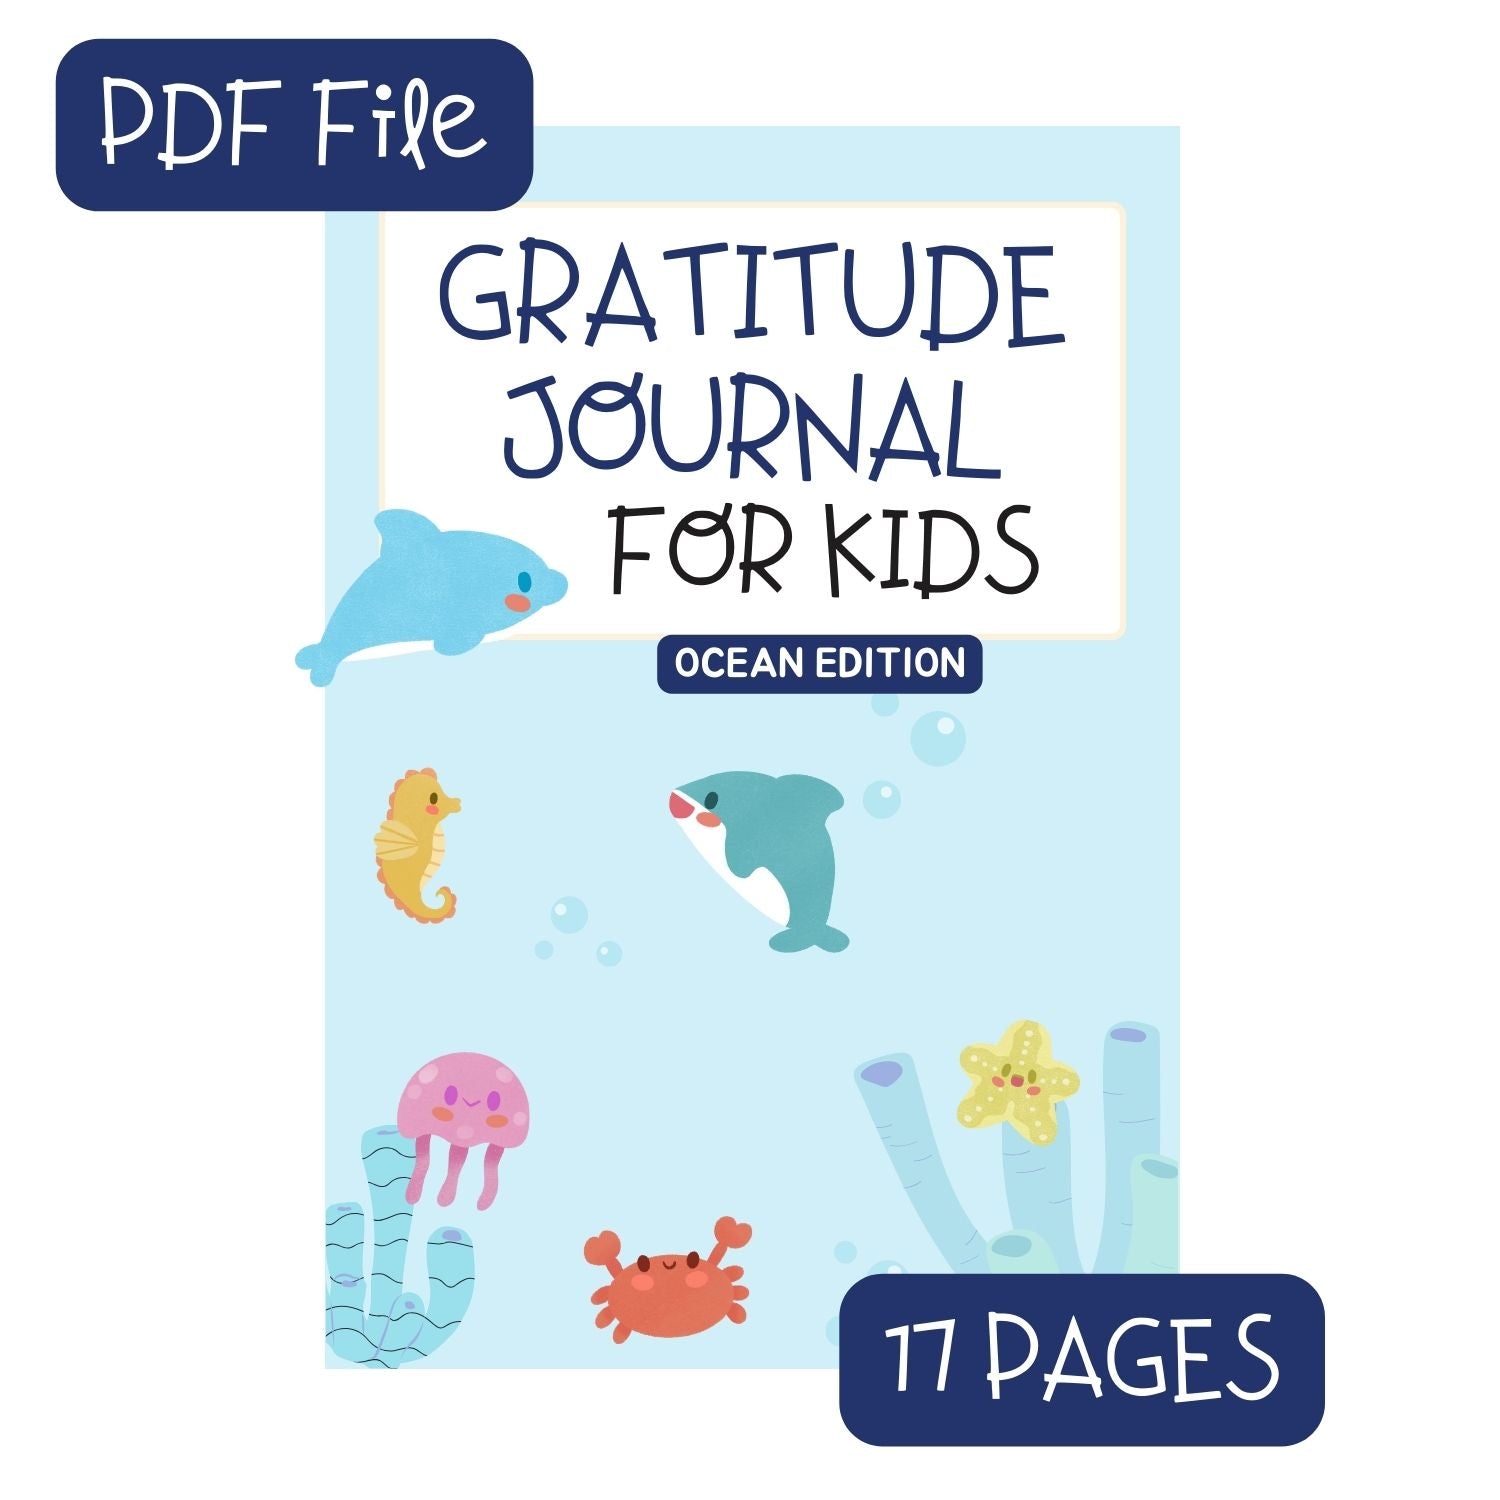 Kids Gratitude Journal - Ocean Edition | Mindful Activity for Children